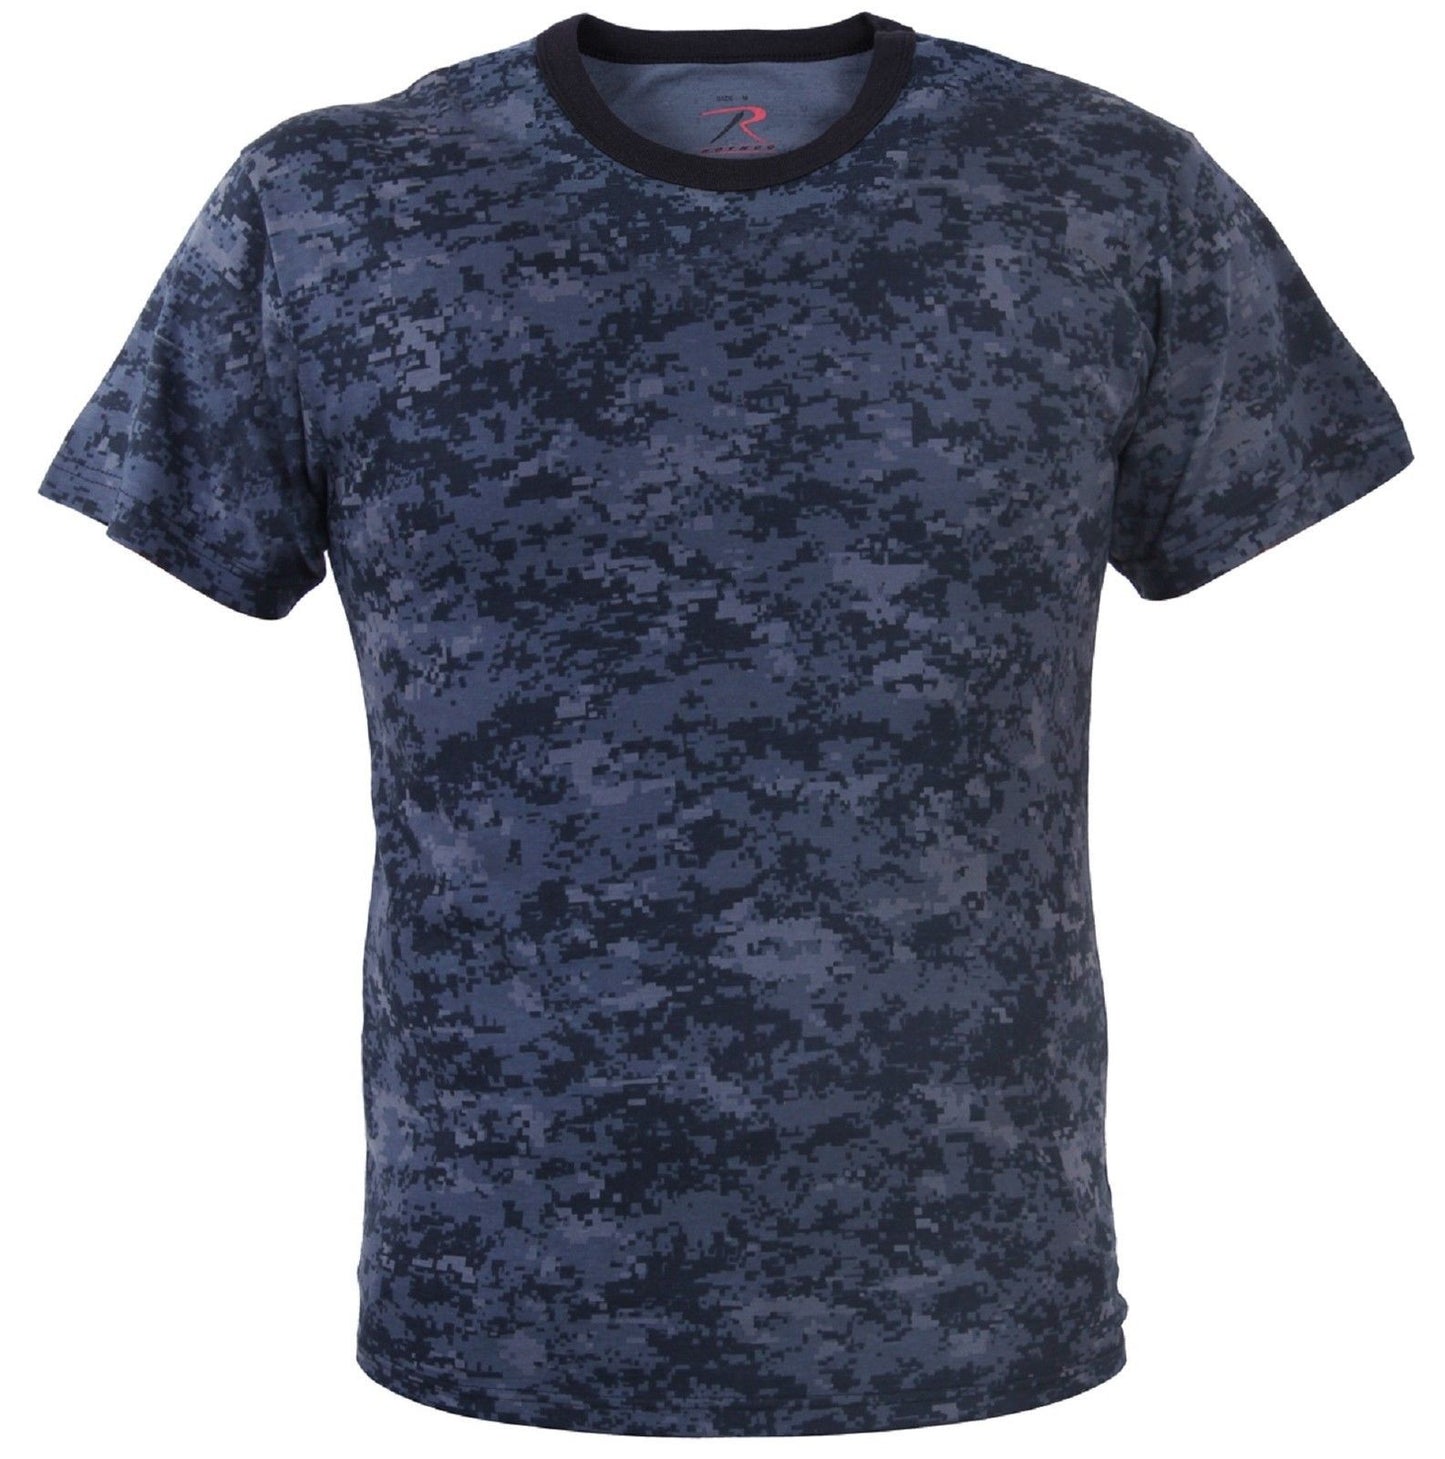 Men's Midnight Blue Digital Camouflage Short Sleeve T-Shirt Rothco 88947